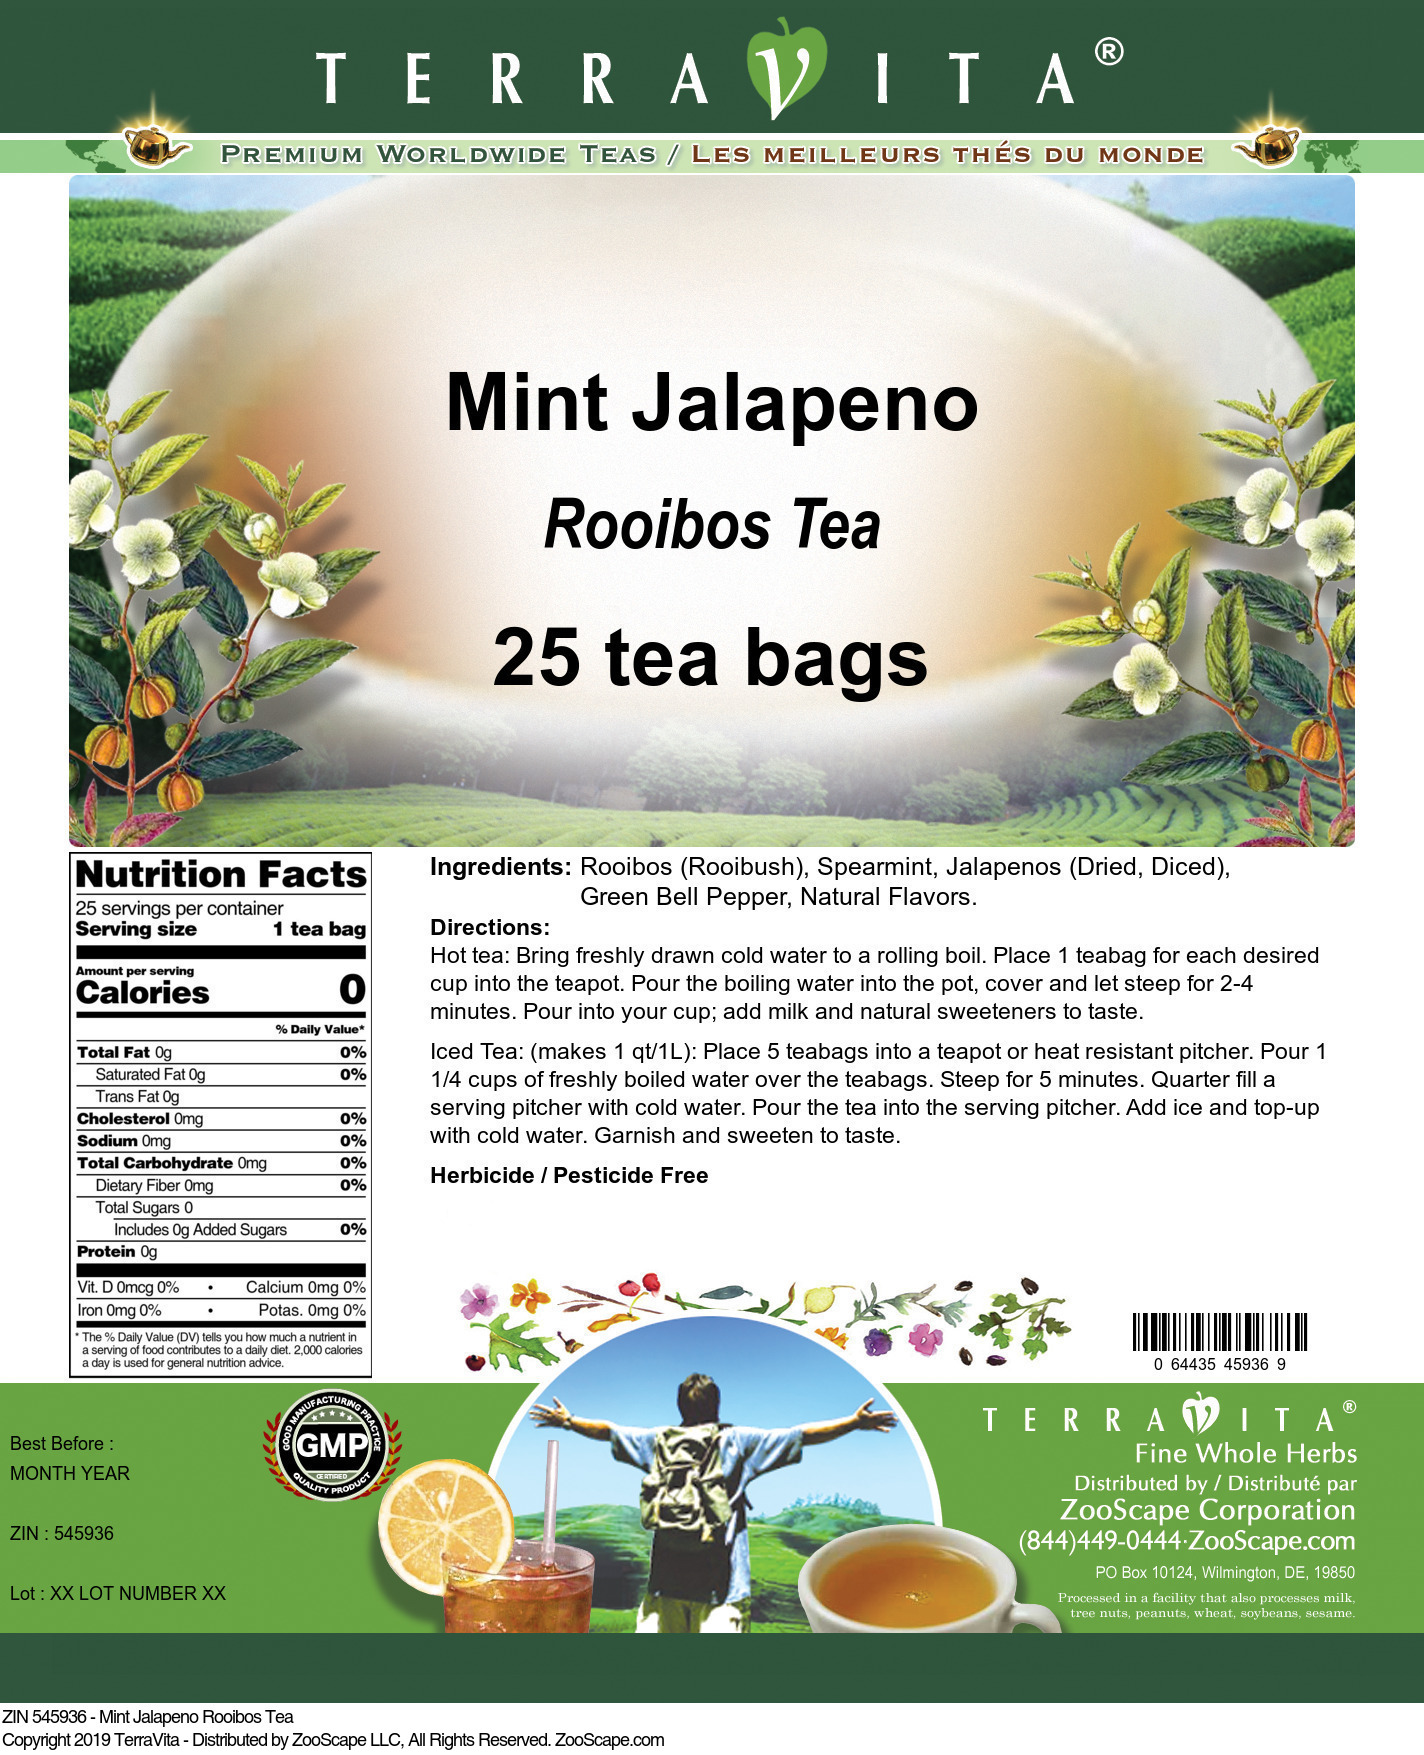 Mint Jalapeno Rooibos Tea - Label